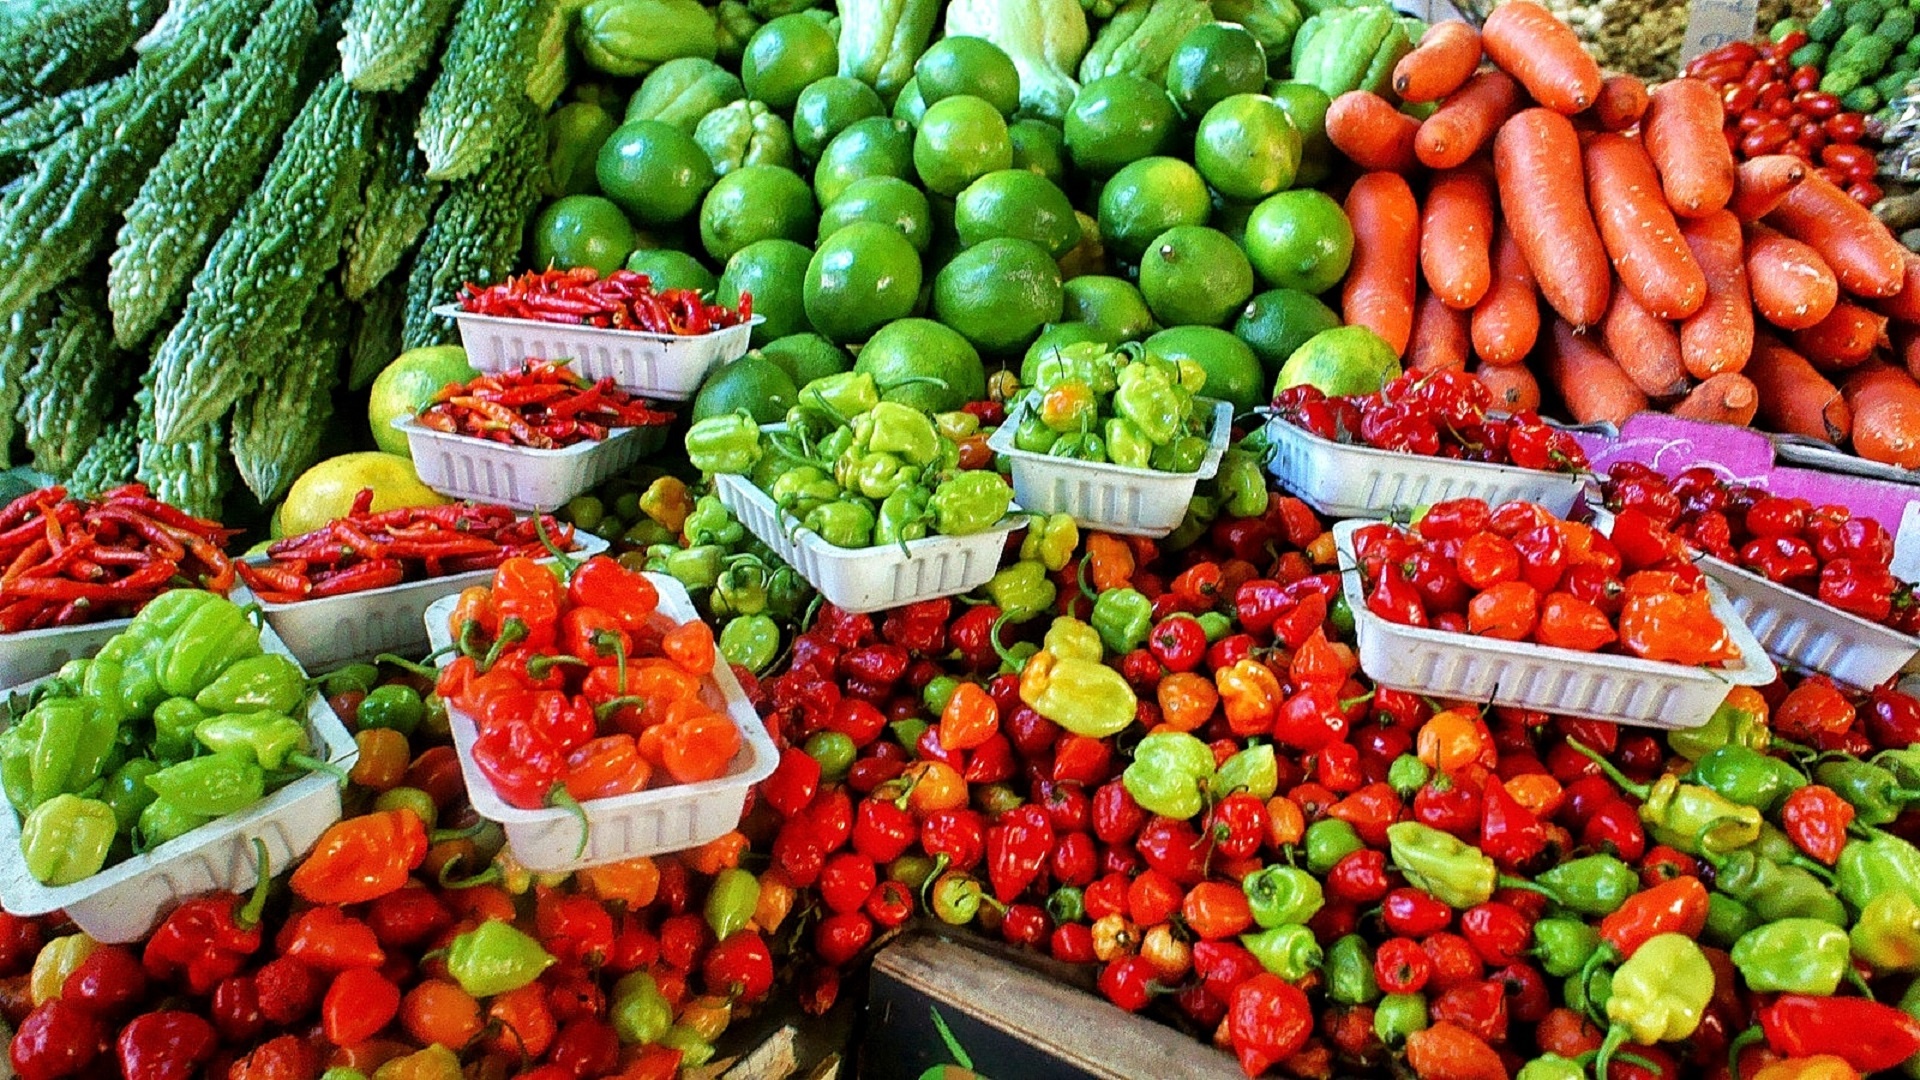 farmers-market-fresh-vegetable-ripe-various-free-image-from-needpix